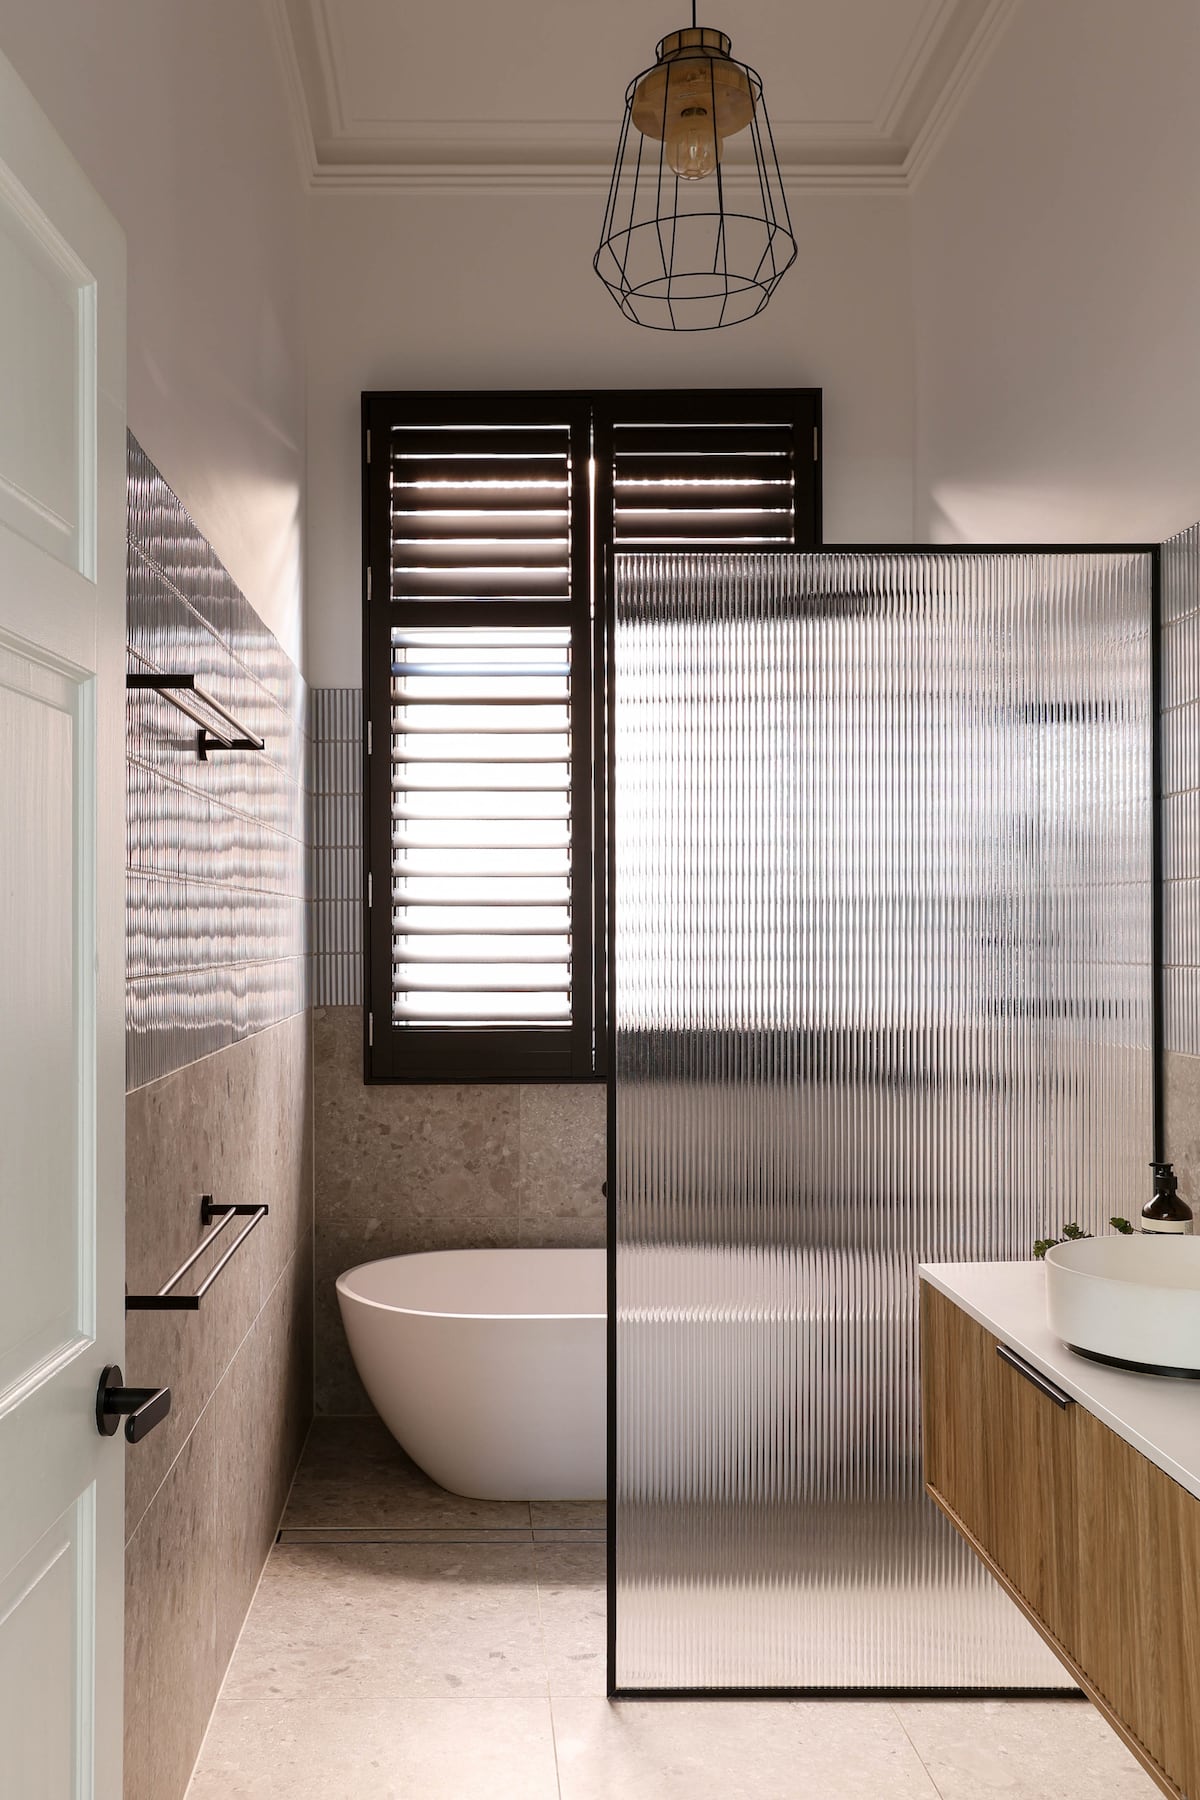 Bathroom Designers Melbourne - The Inside Project